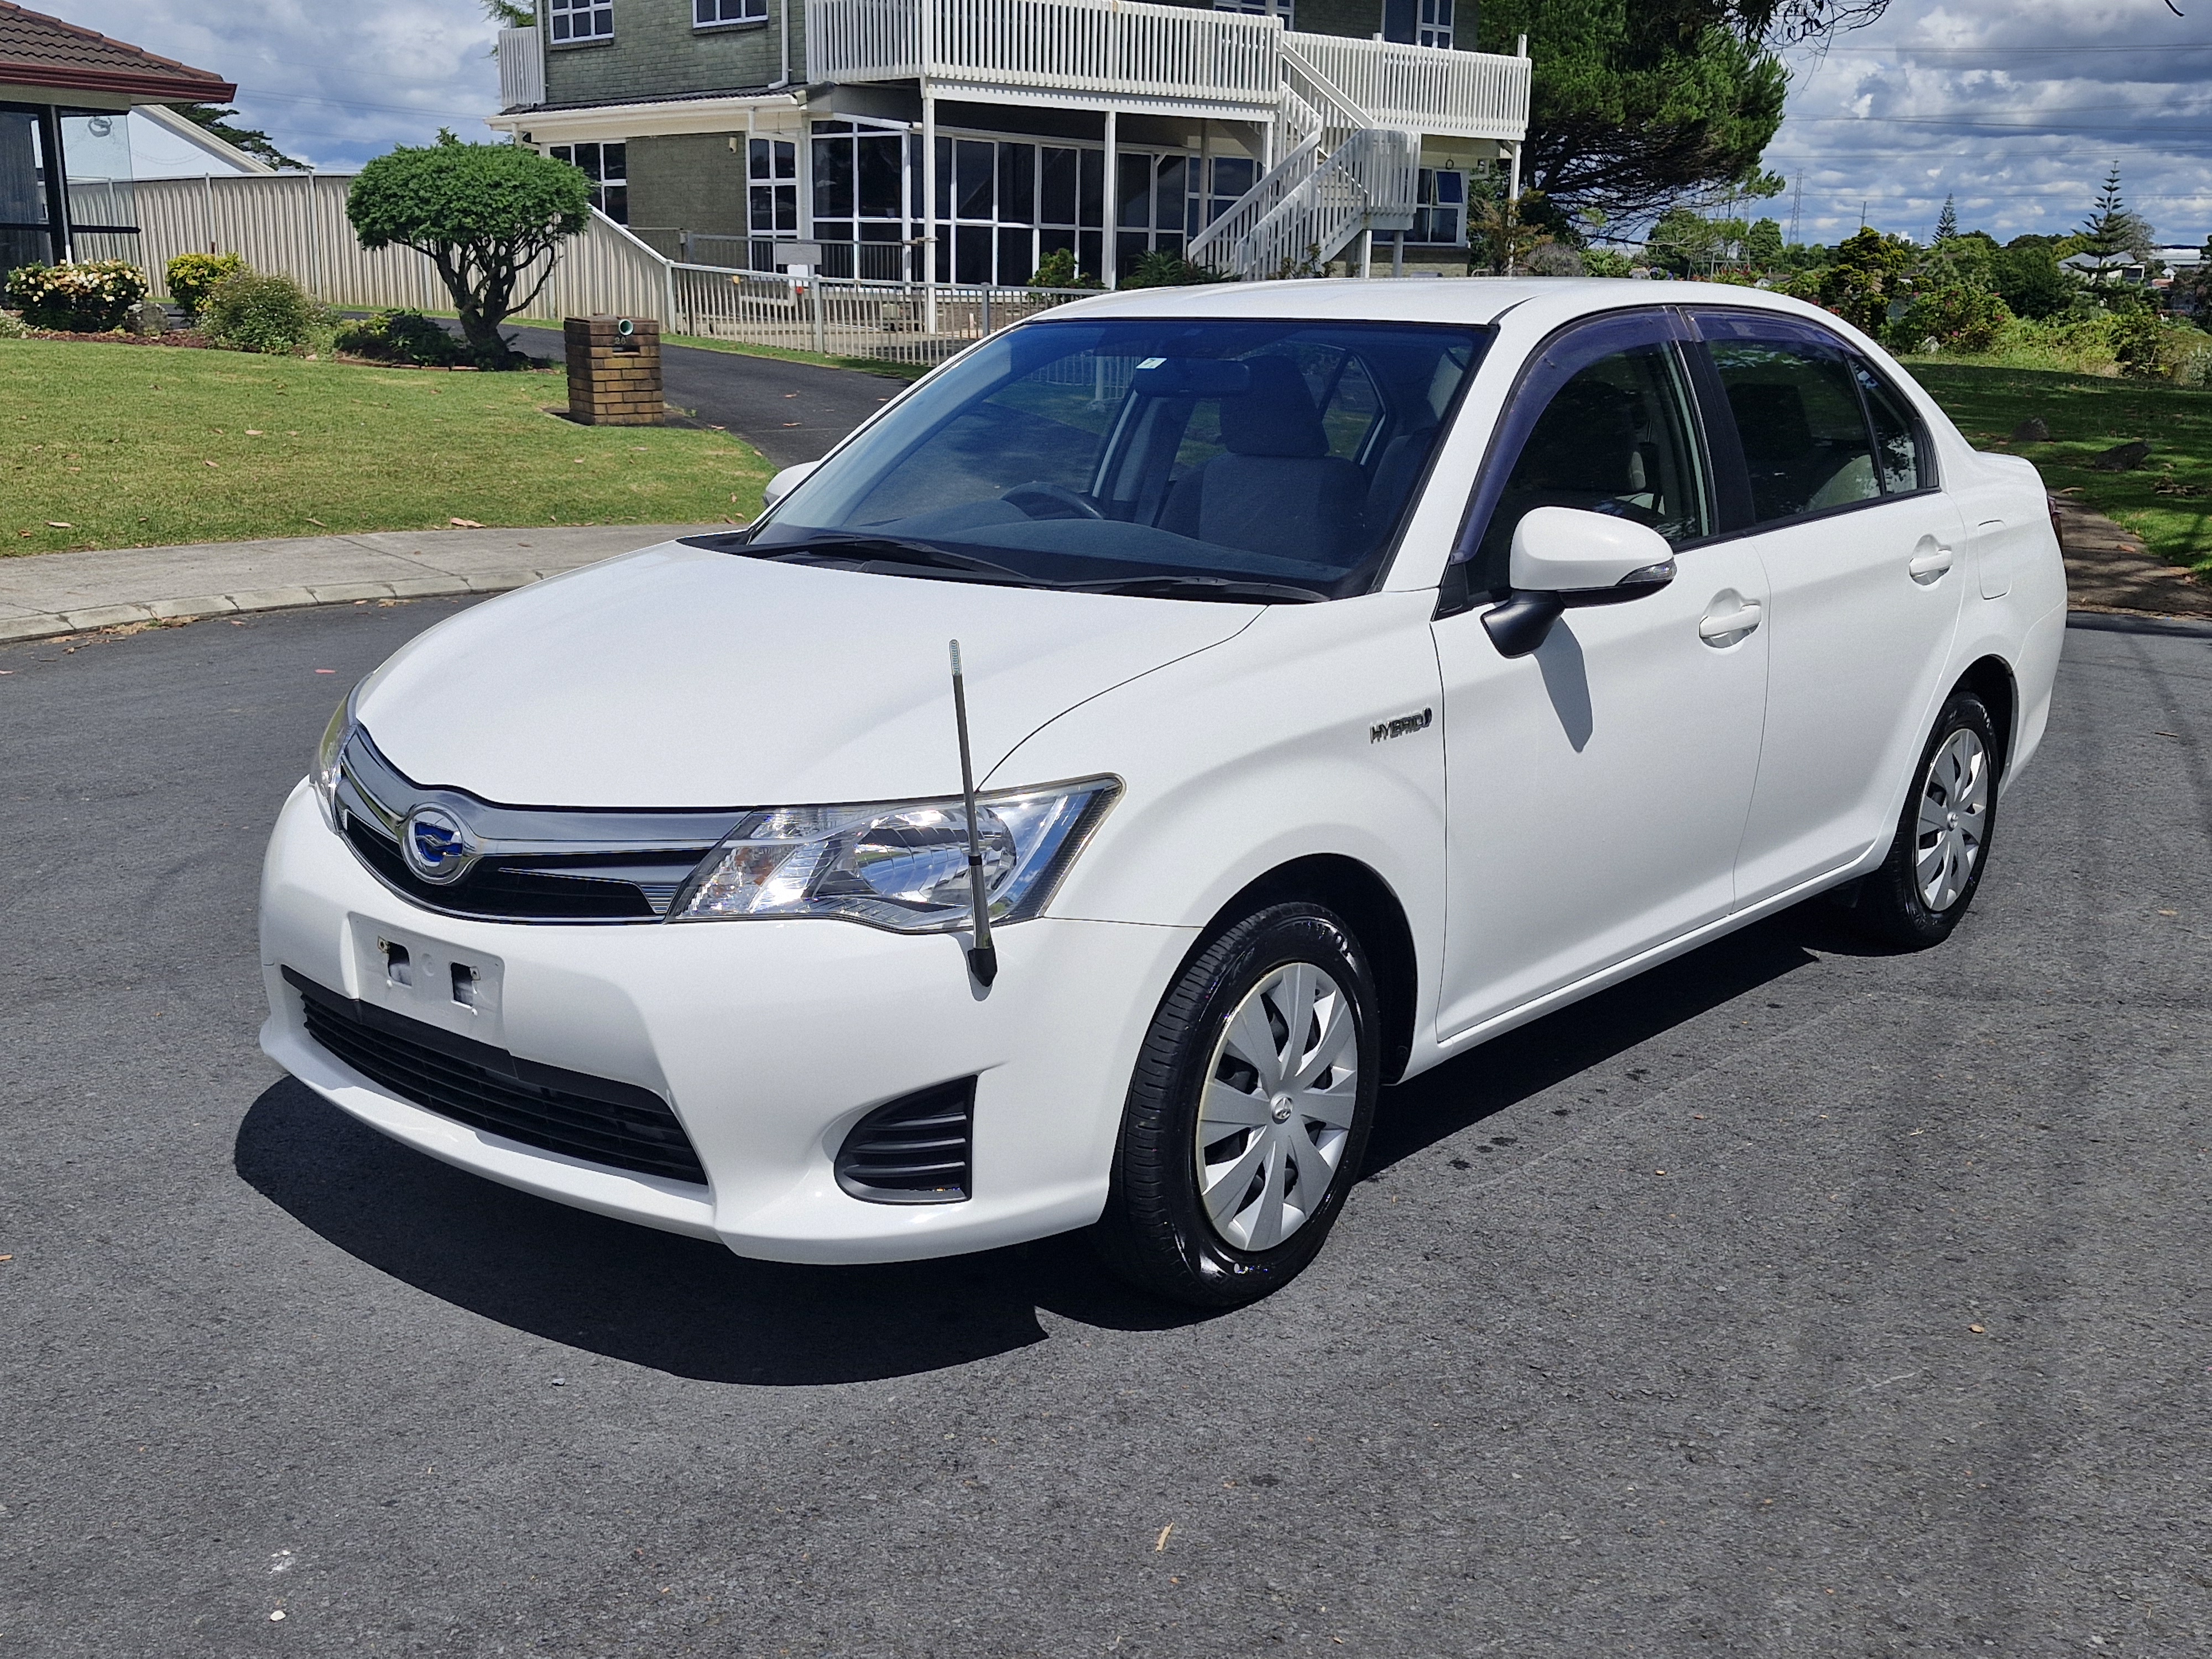 2014 - Toyota Axio. 82K. Available. $11450.